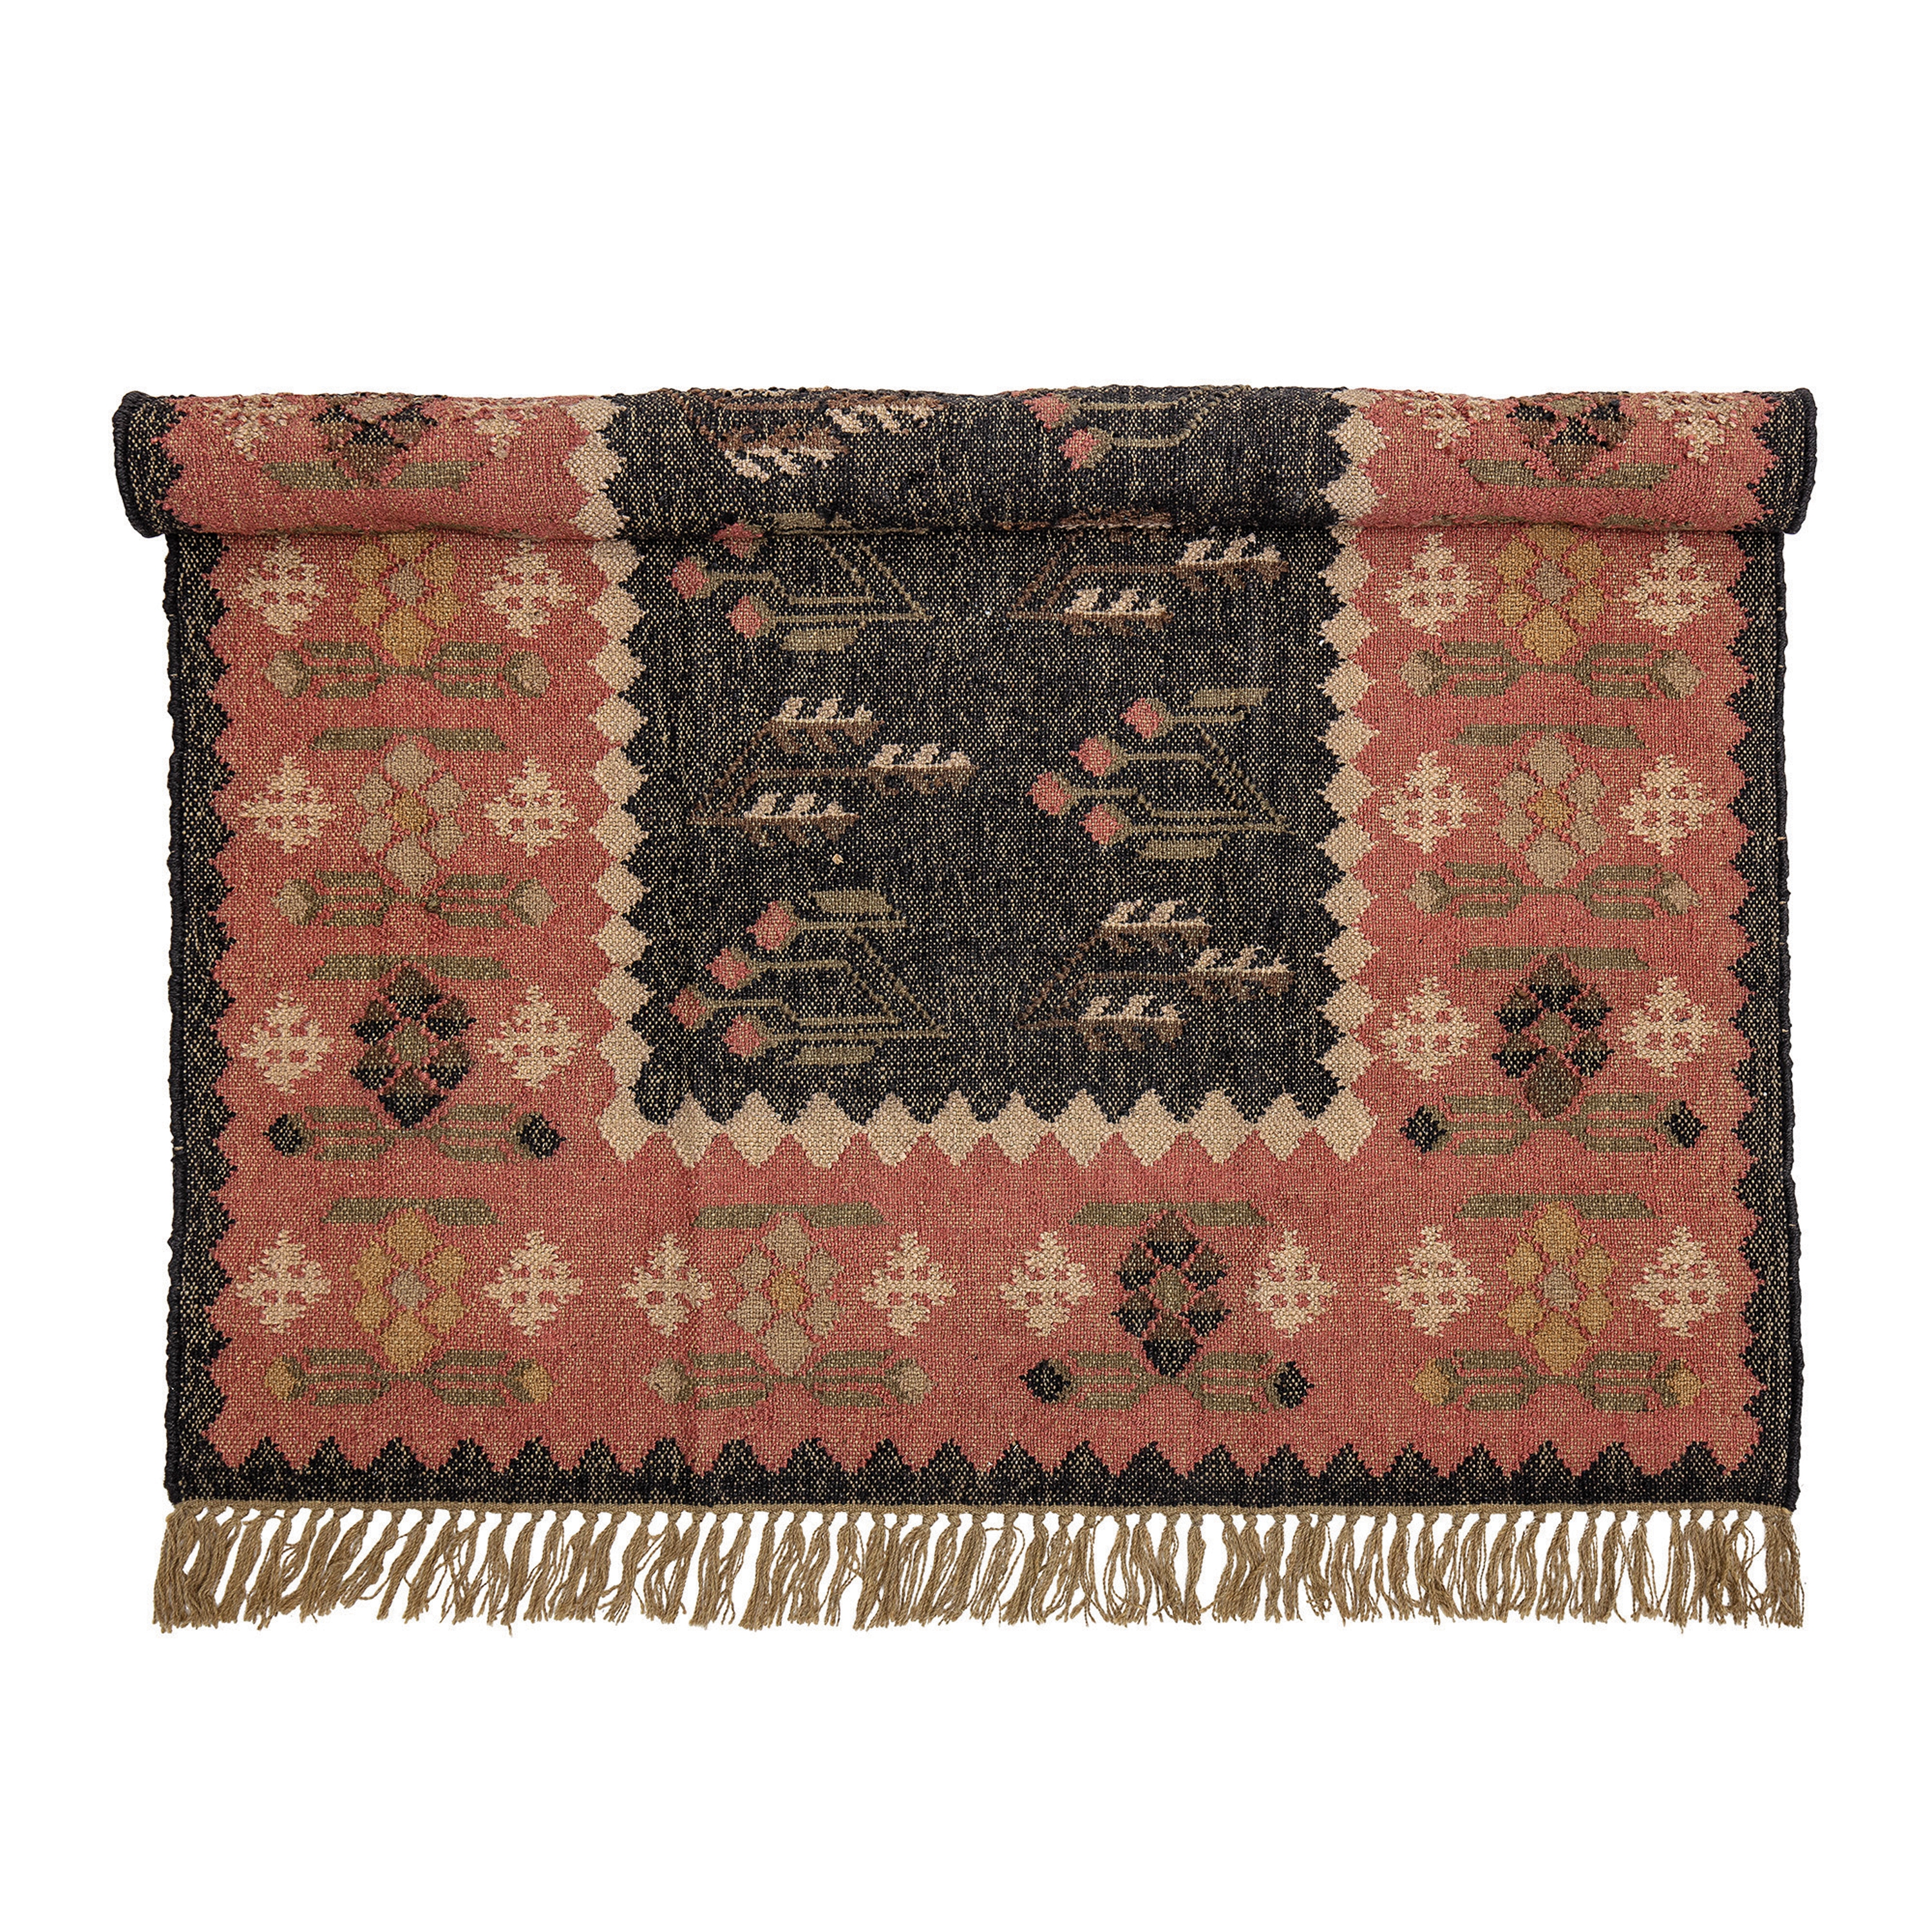 4' x 6' Multicolor Woven Jute Kilim Rug with Cotton Fringe - Image 0